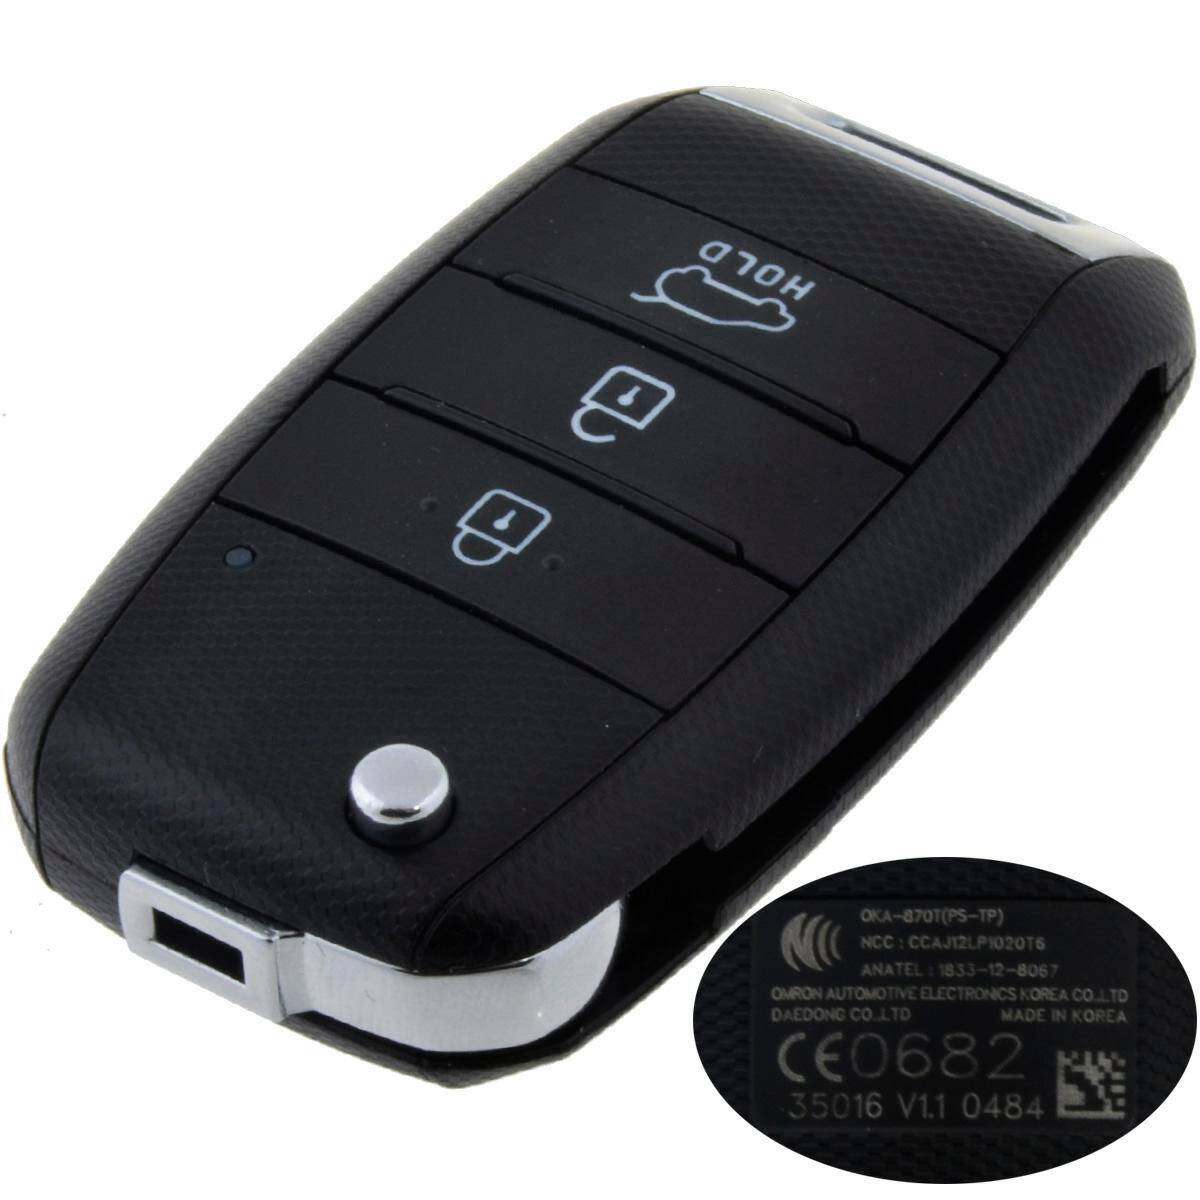 Remote Kia Ceed - 2013-2015  Motokey online store - Keys, Remotes,  Accessories, Locks